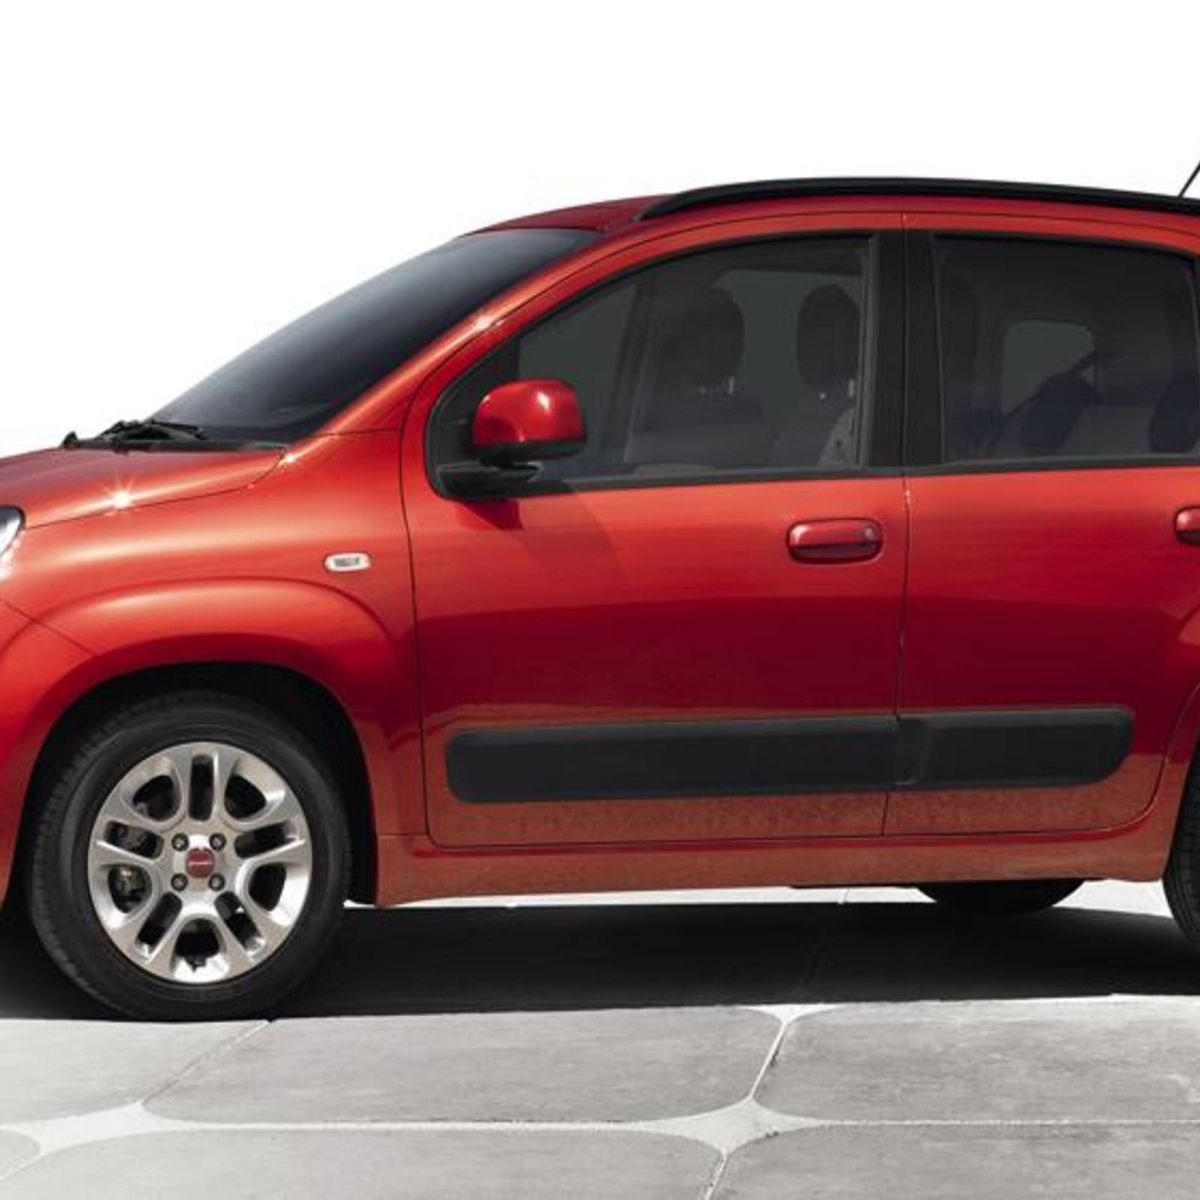 Alternativ Tilsvarende Orient Fiat unveils a longer, wider Panda ahead of Frankfurt debut